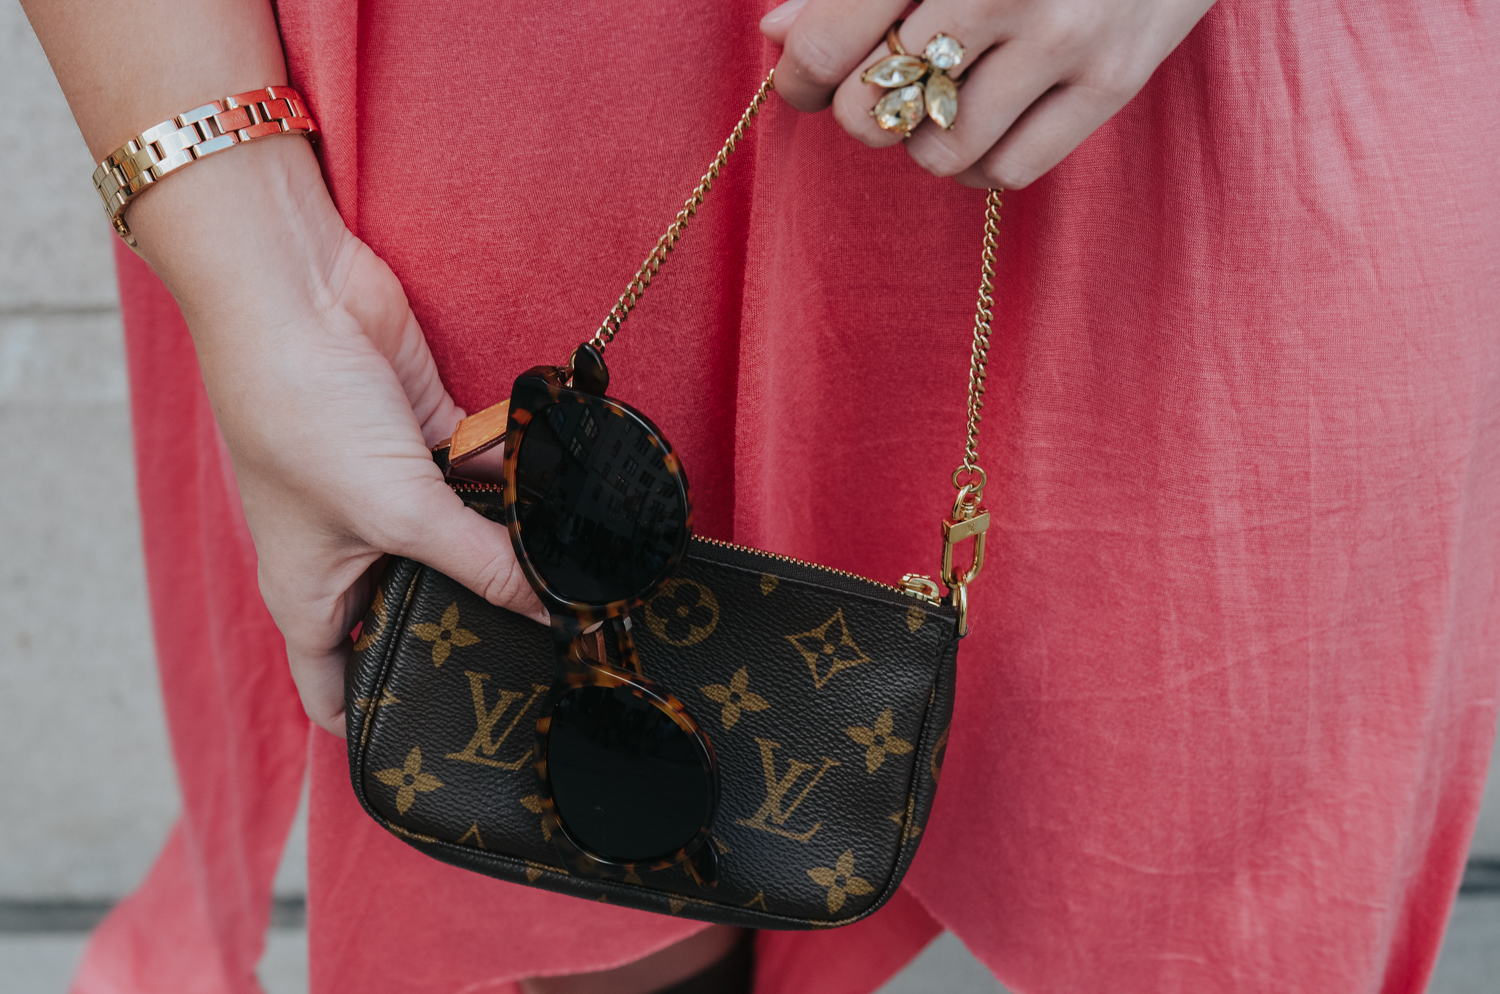 Accessories: Louis Vuitton Pochette Accessoire cloth handbag, Cocktail Ring from @7charmingsister, Sunglasses from @publicsunglasses